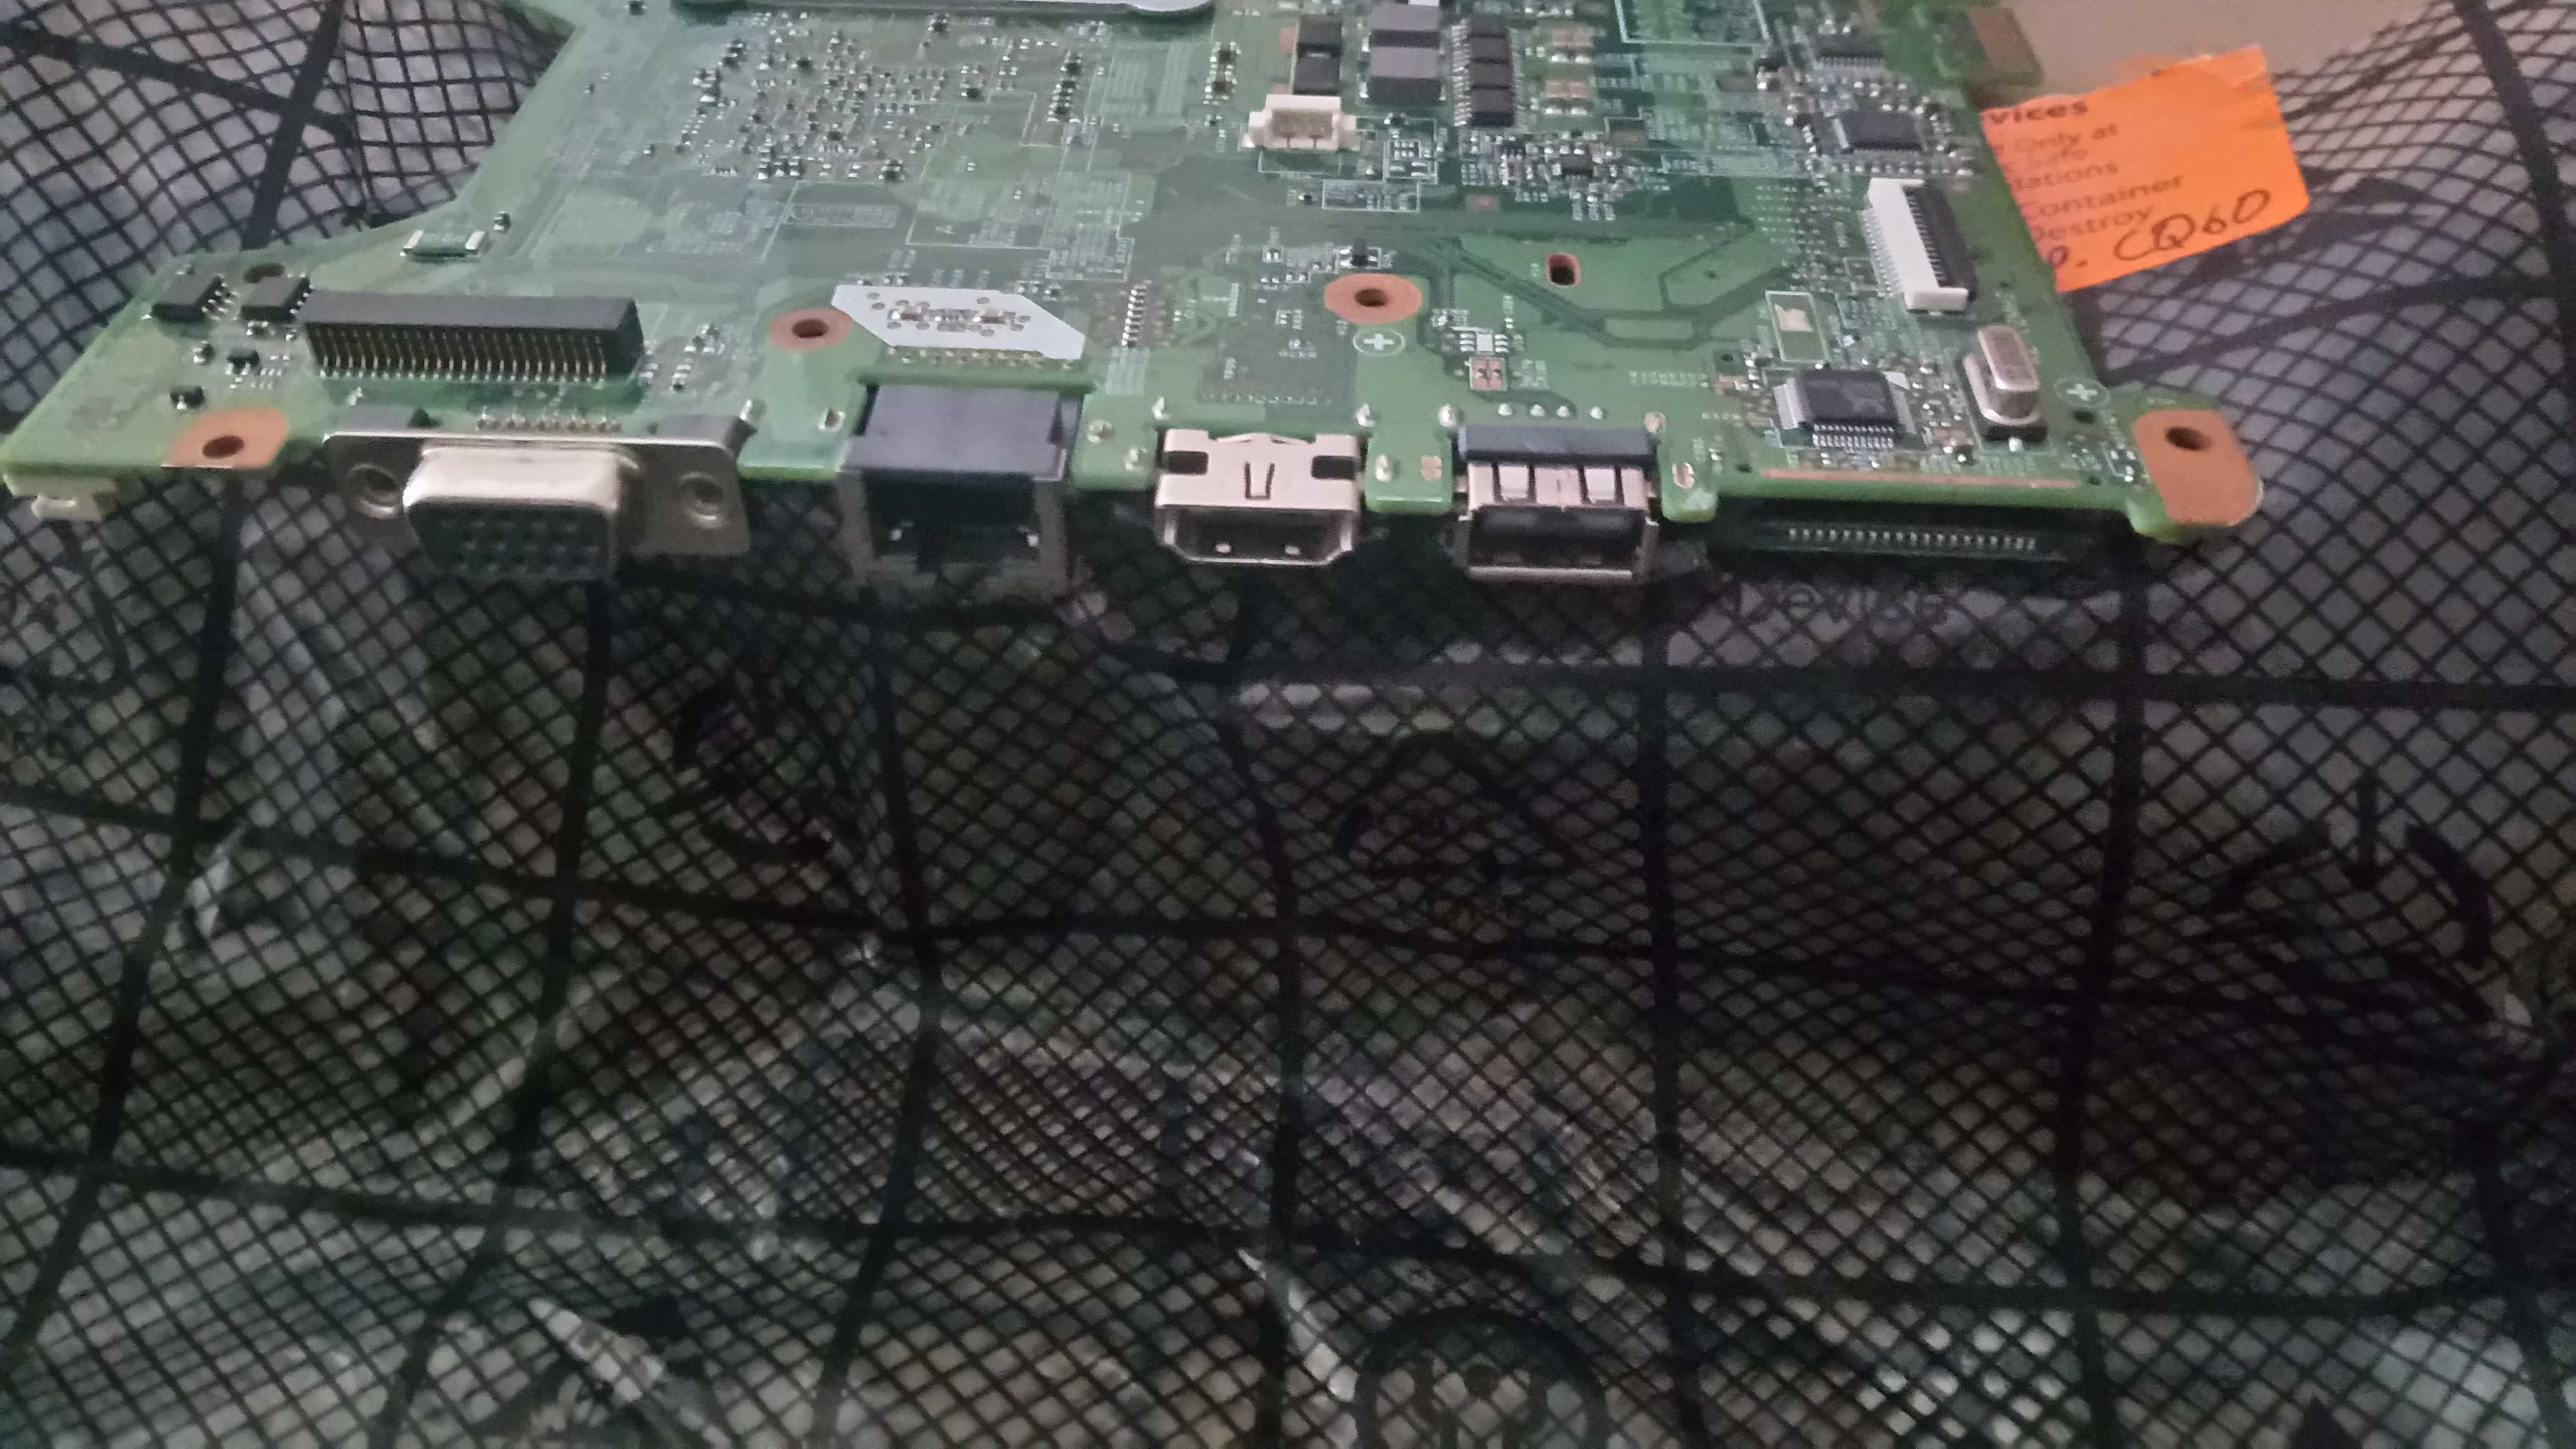 Motherboard para Portátil HP G60 / Compaq CQ60 série AMD - Nova